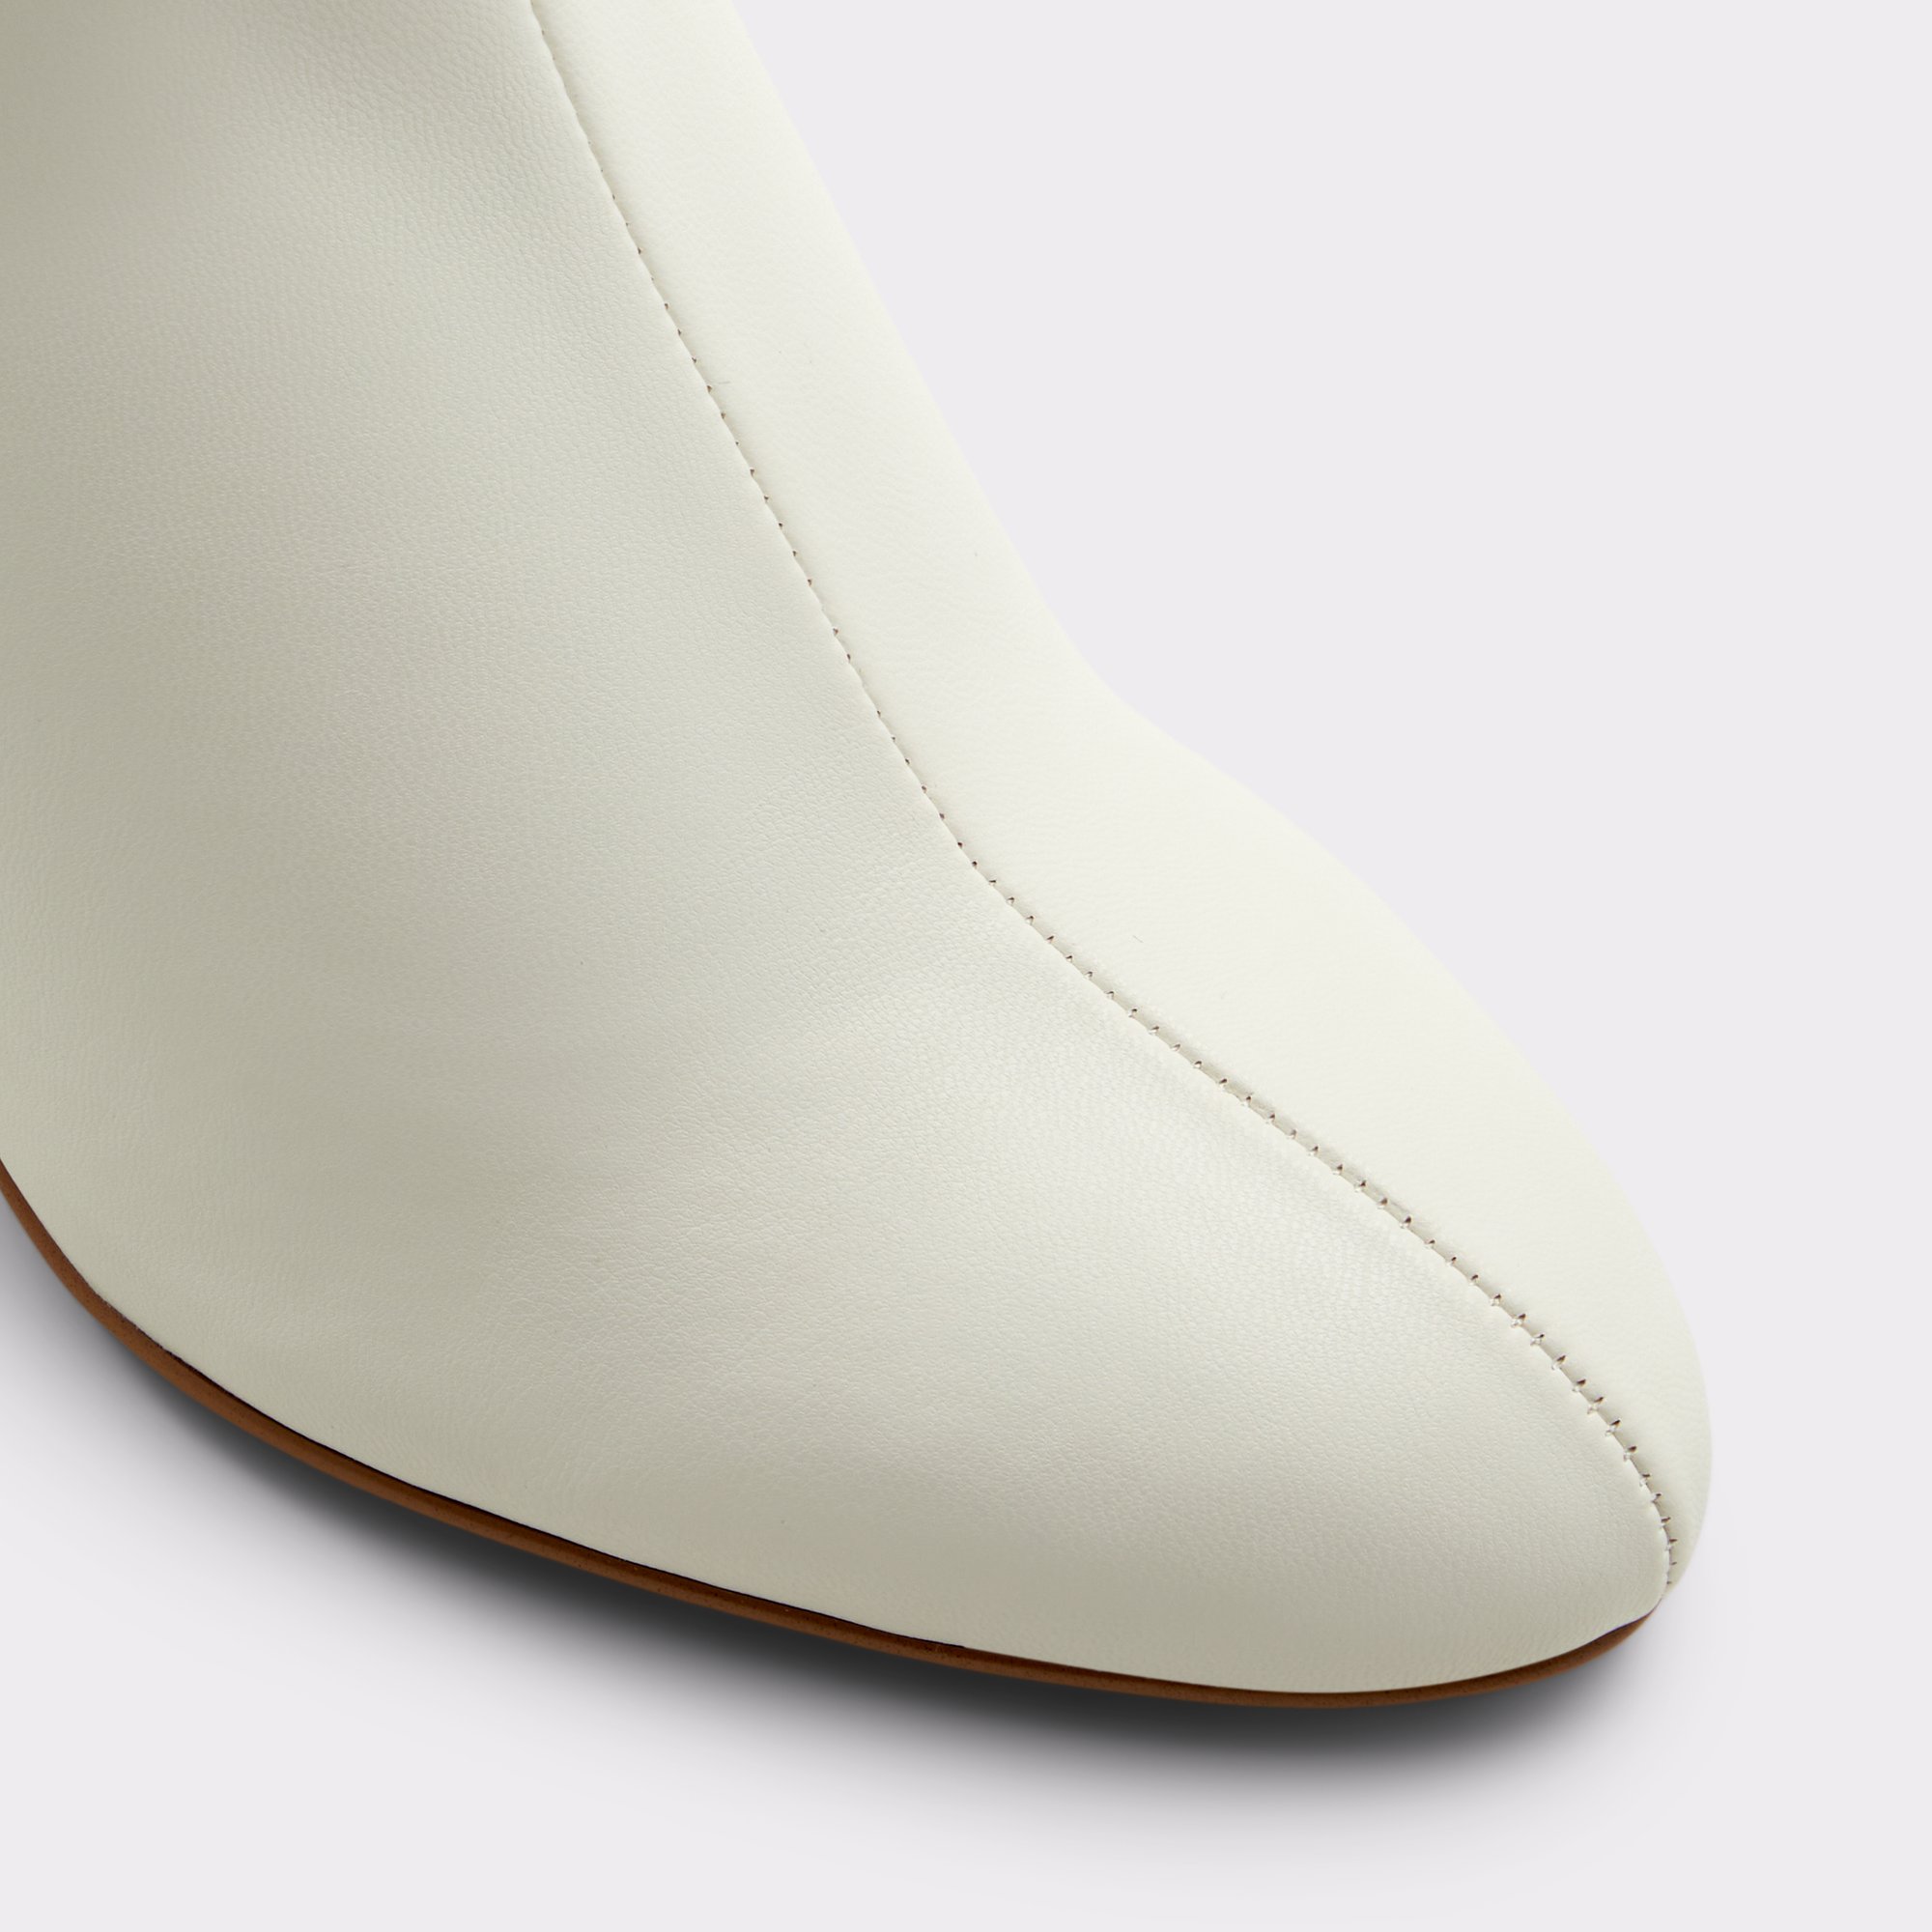 Haucan White/Bone Women's Dress boots | ALDO Canada